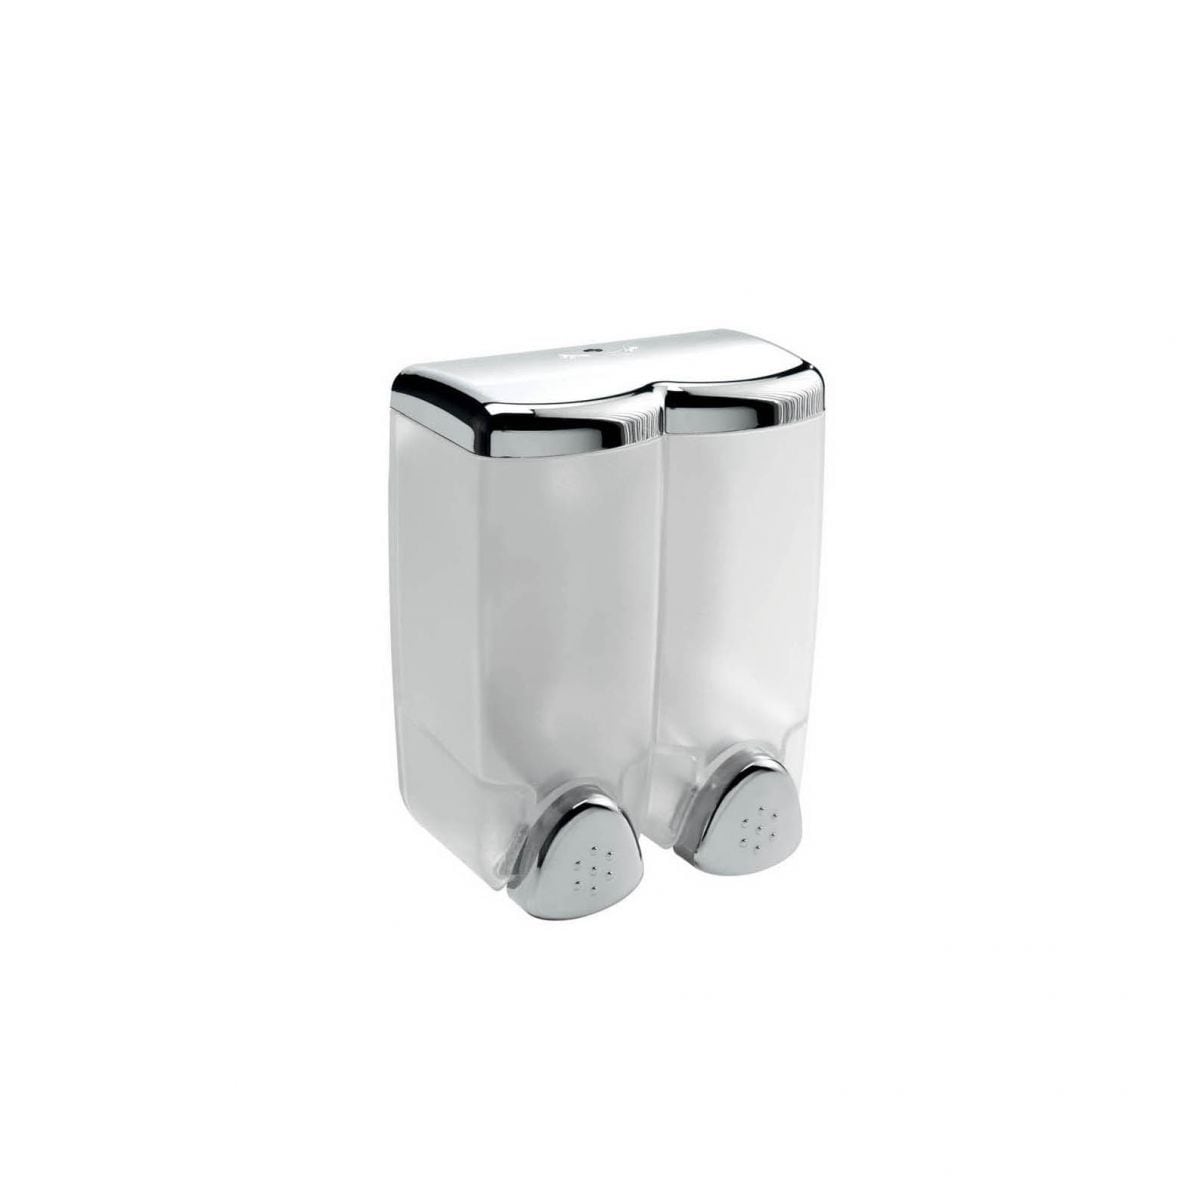 OXO Good Grips Soap Dispenser in Stainless Steel 13144000 - The